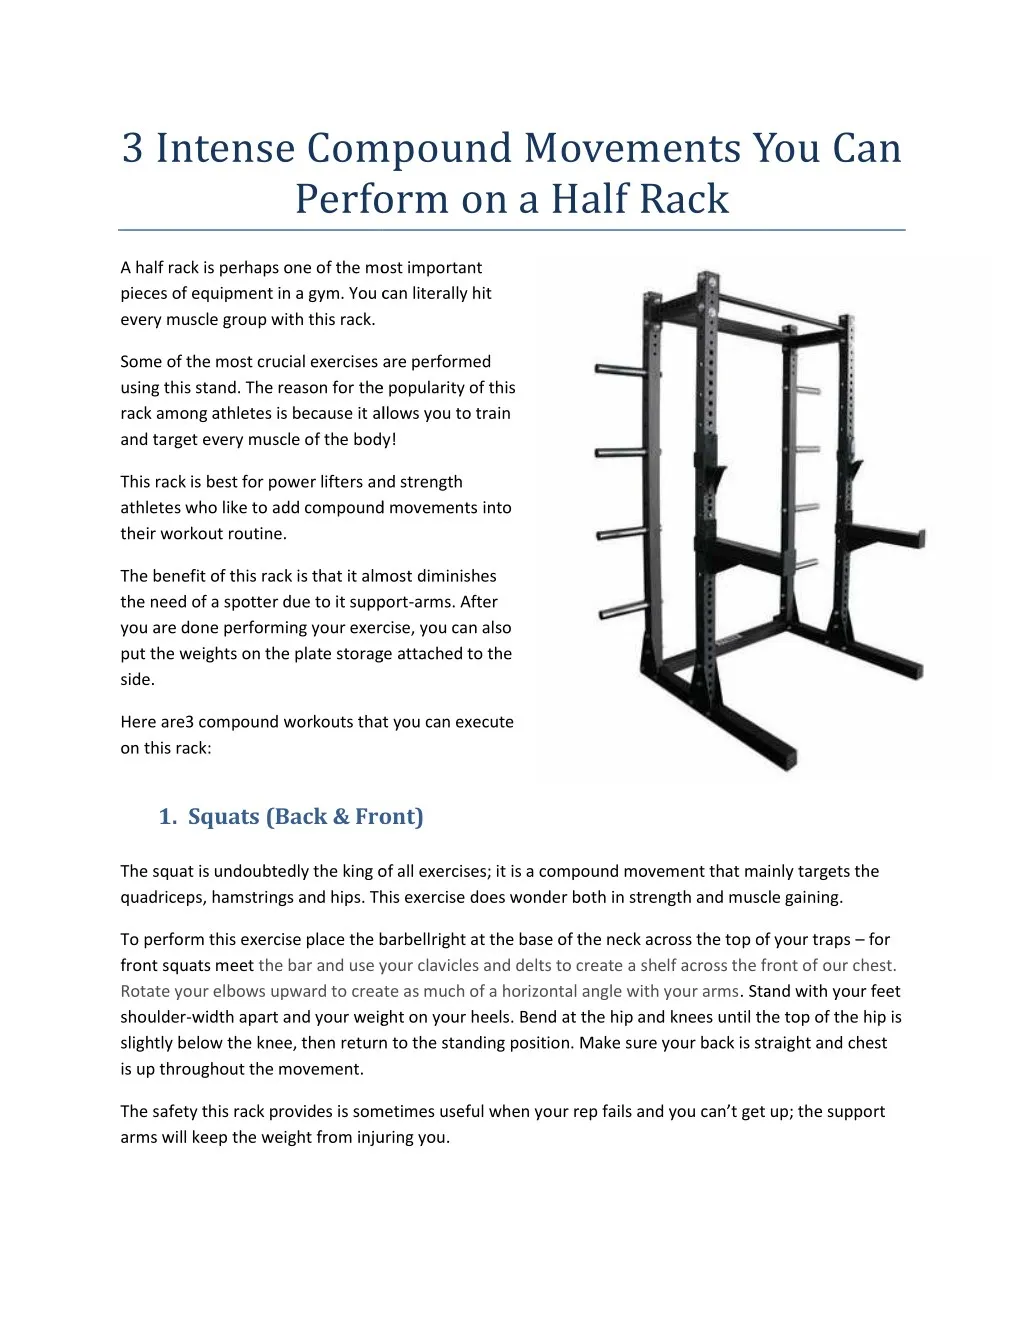 3 intense compound perform on a half rack perform